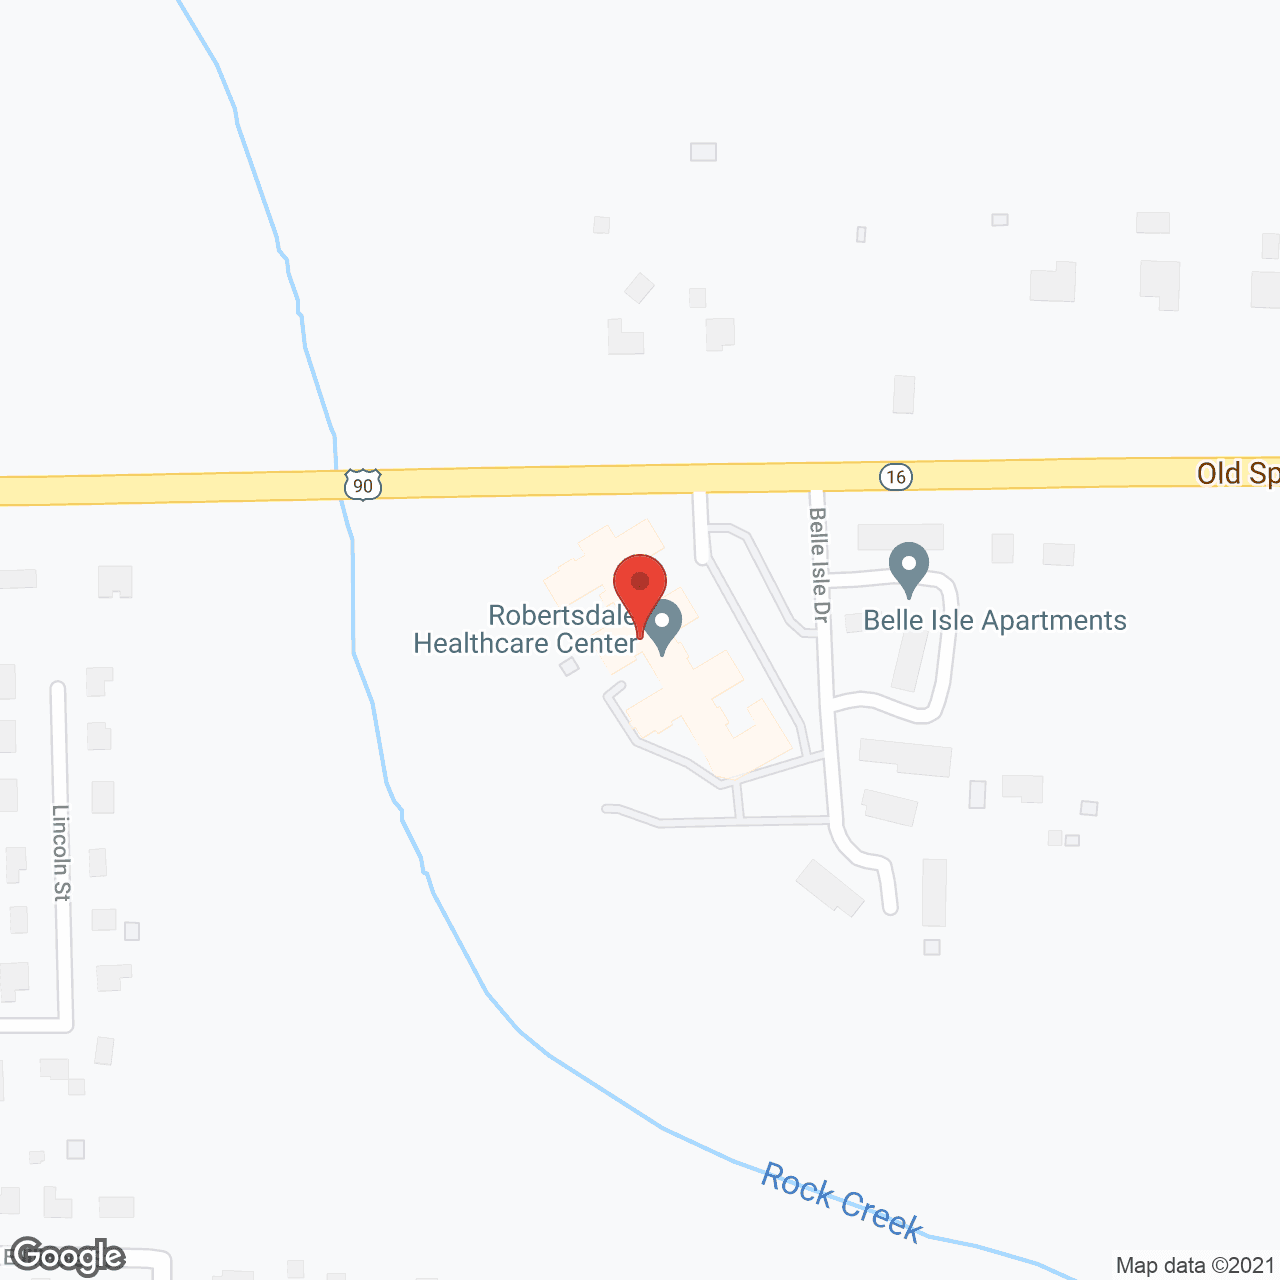 Robertsdale Healthcare Center in google map